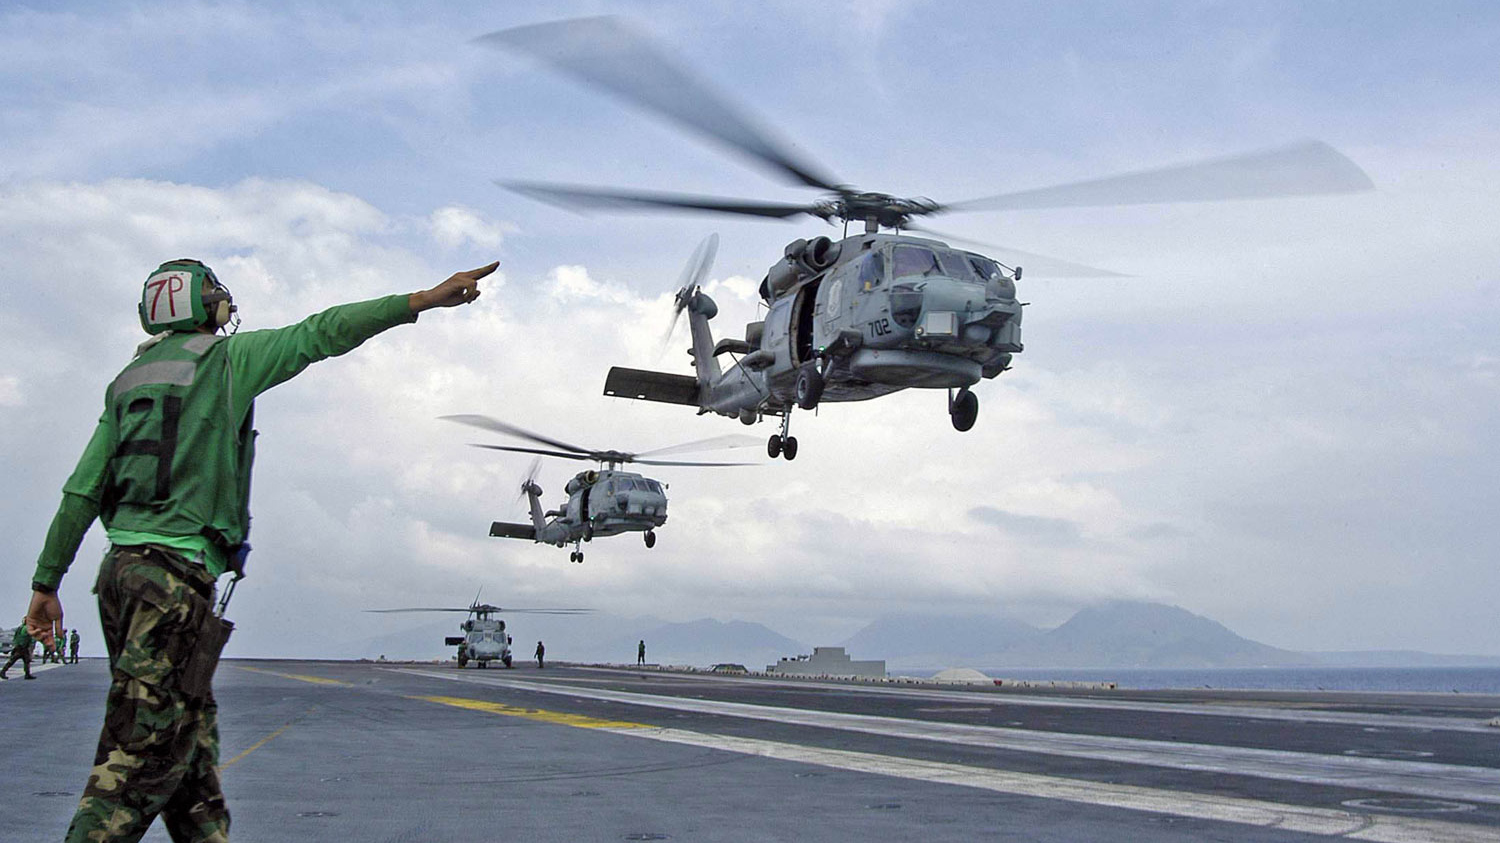 Вертолет Sikorsky UH-60 Black Hawk